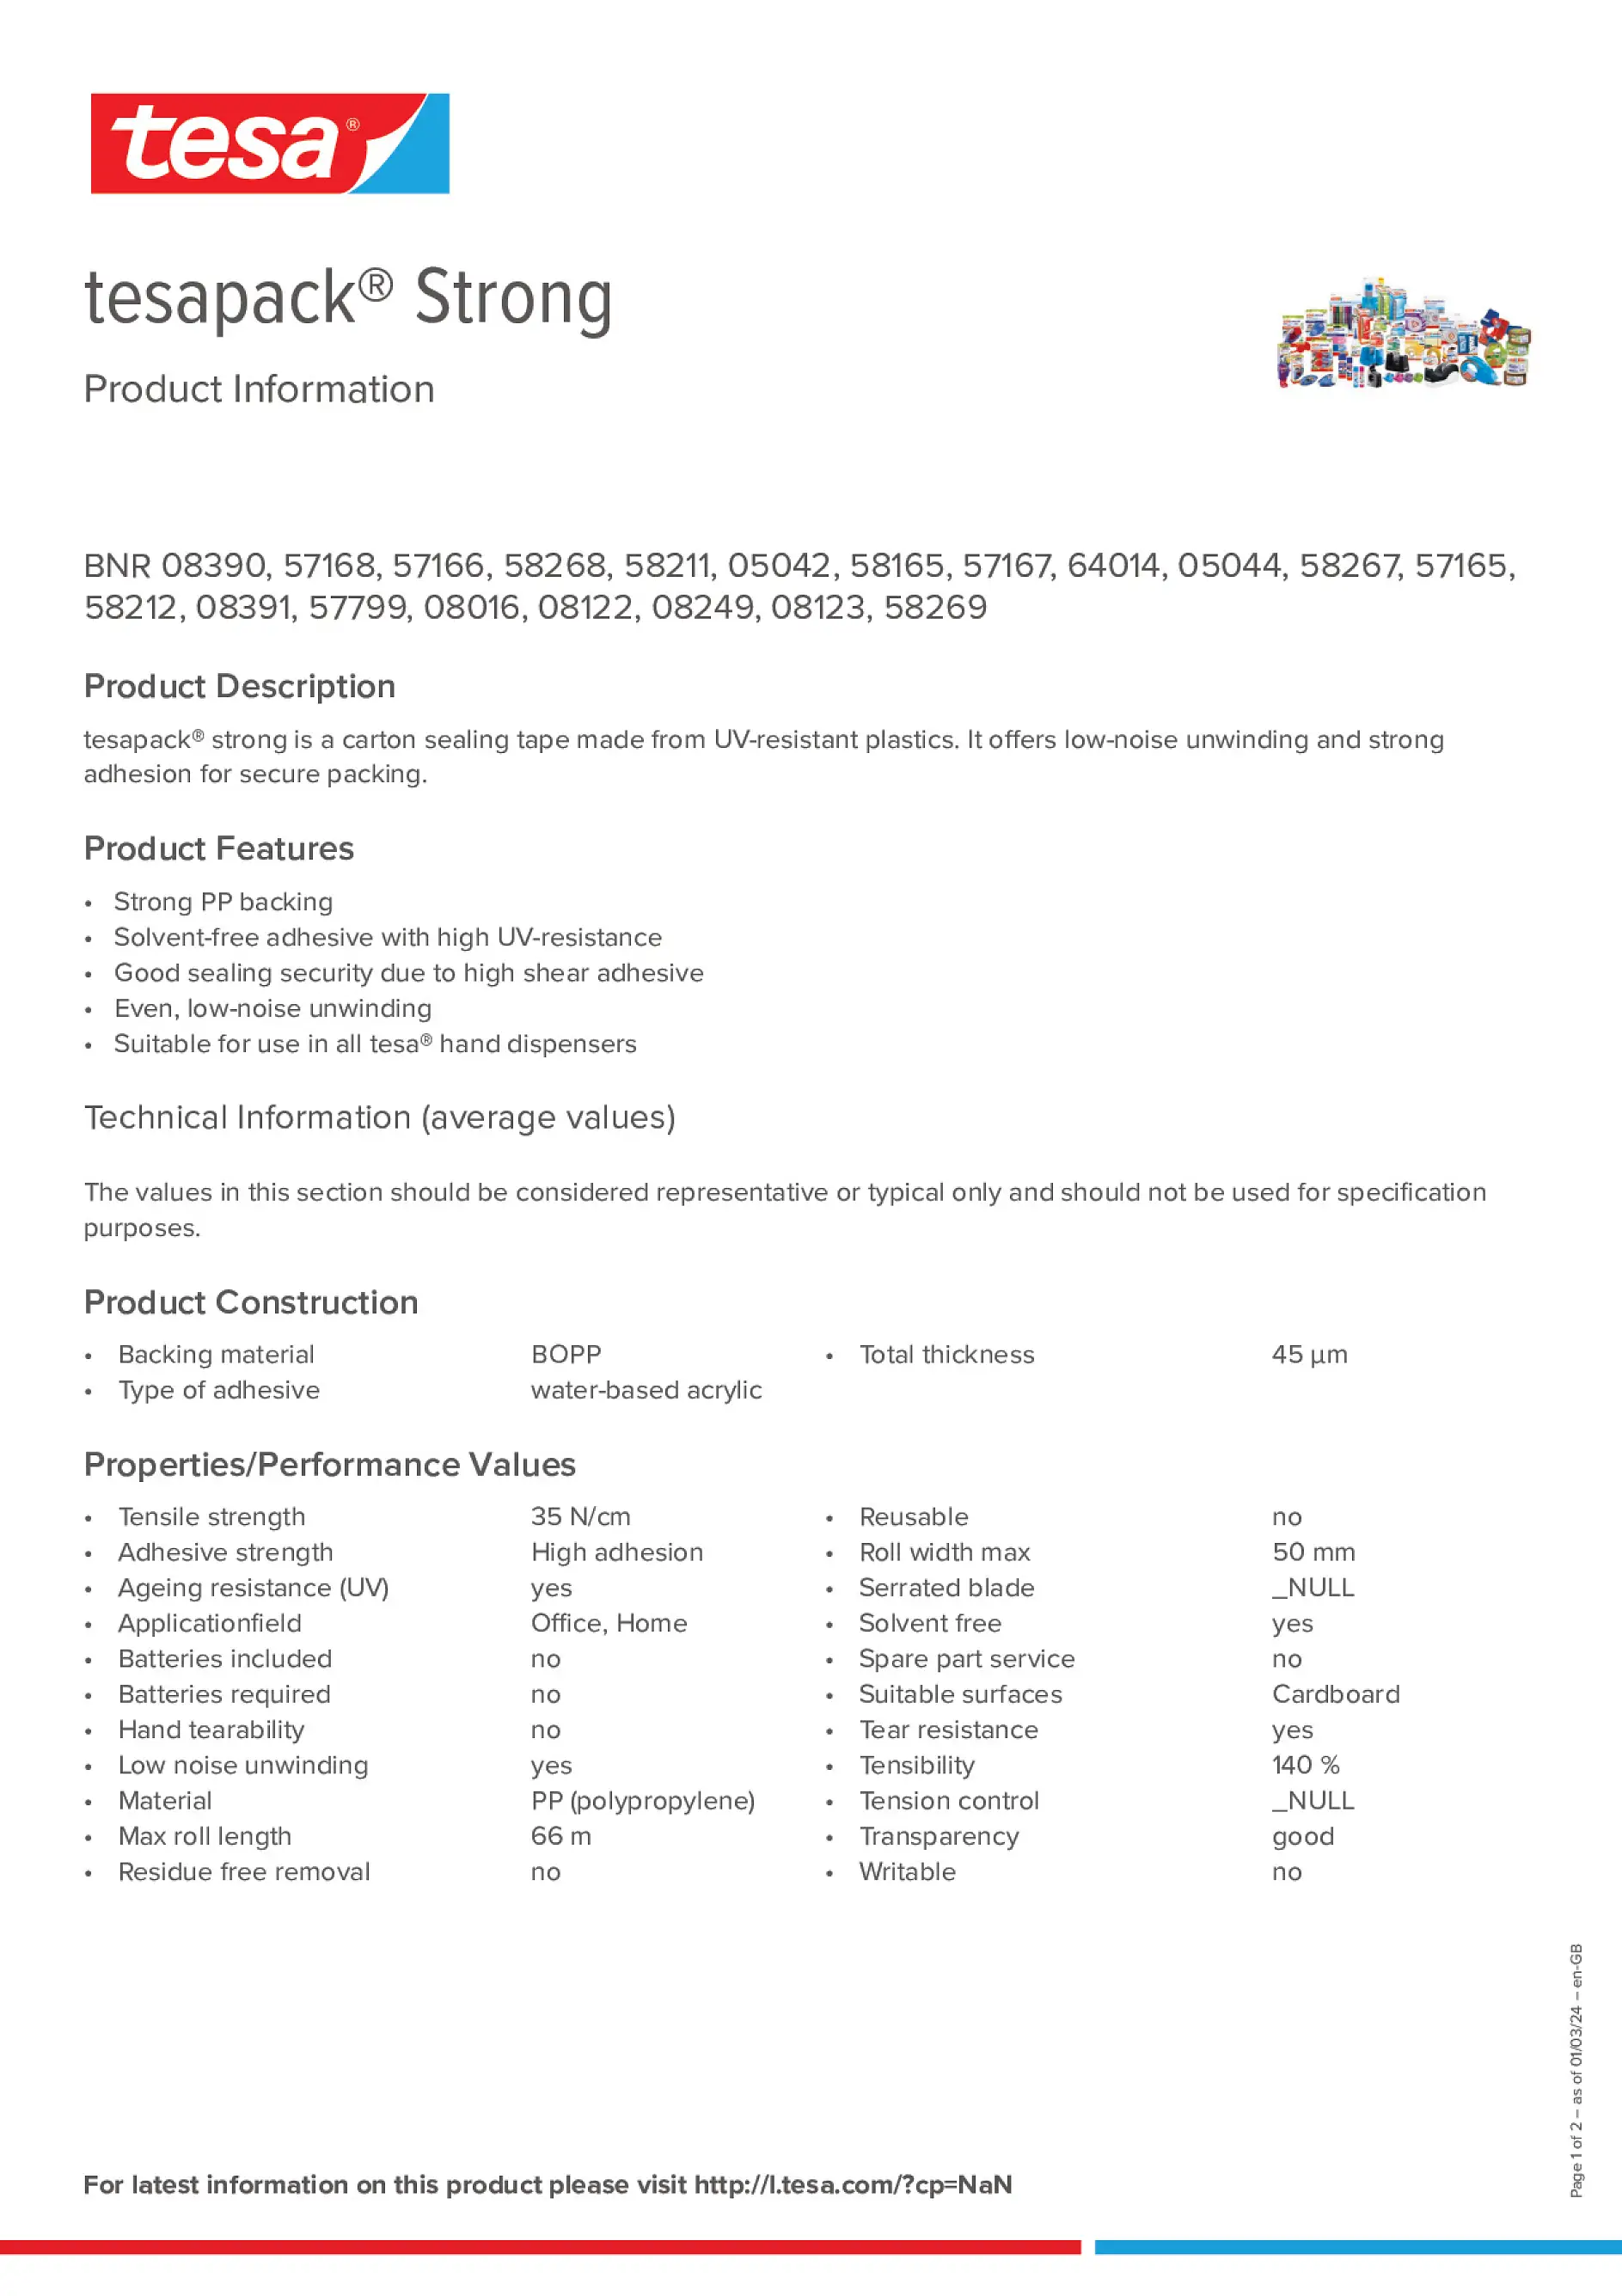 Product information_tesapack® 57424_en-GB